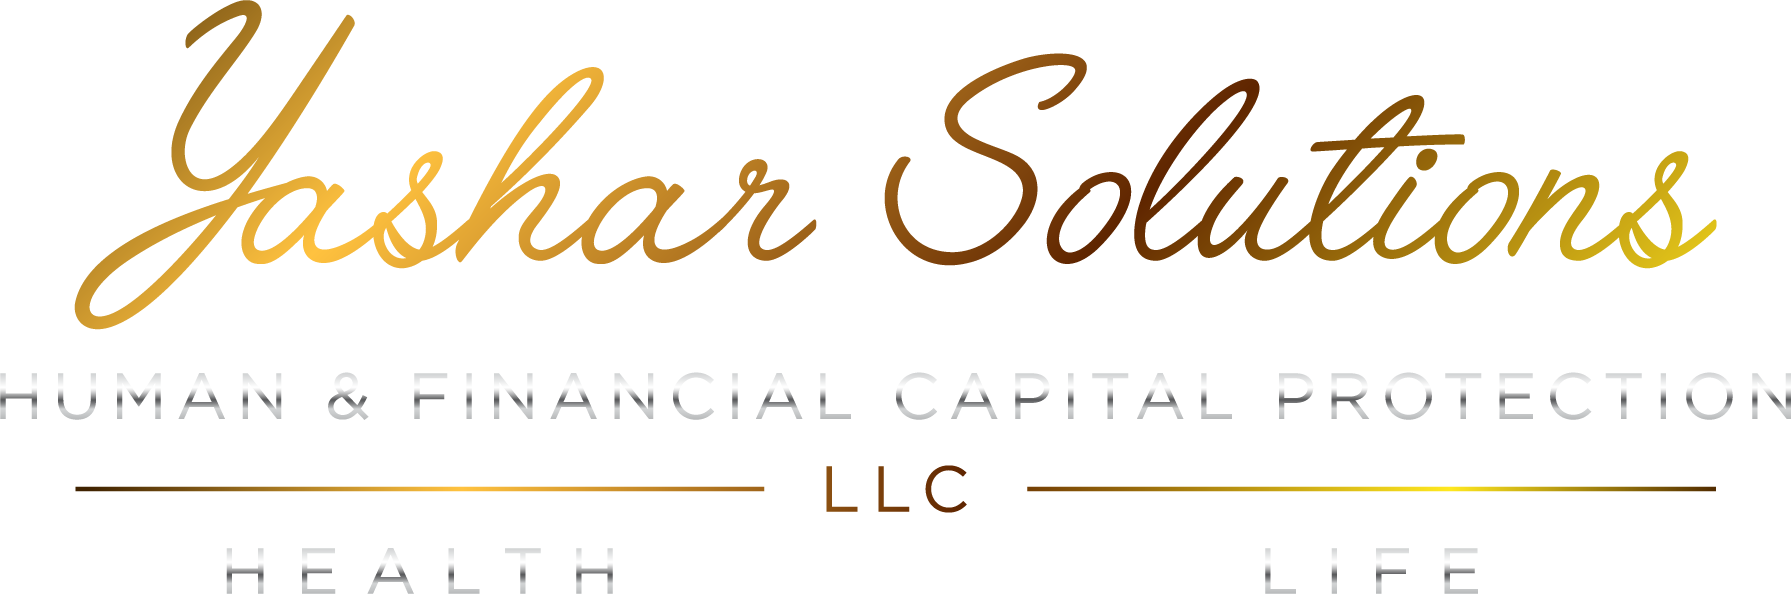 Yashar Solutions LLC logo new-01